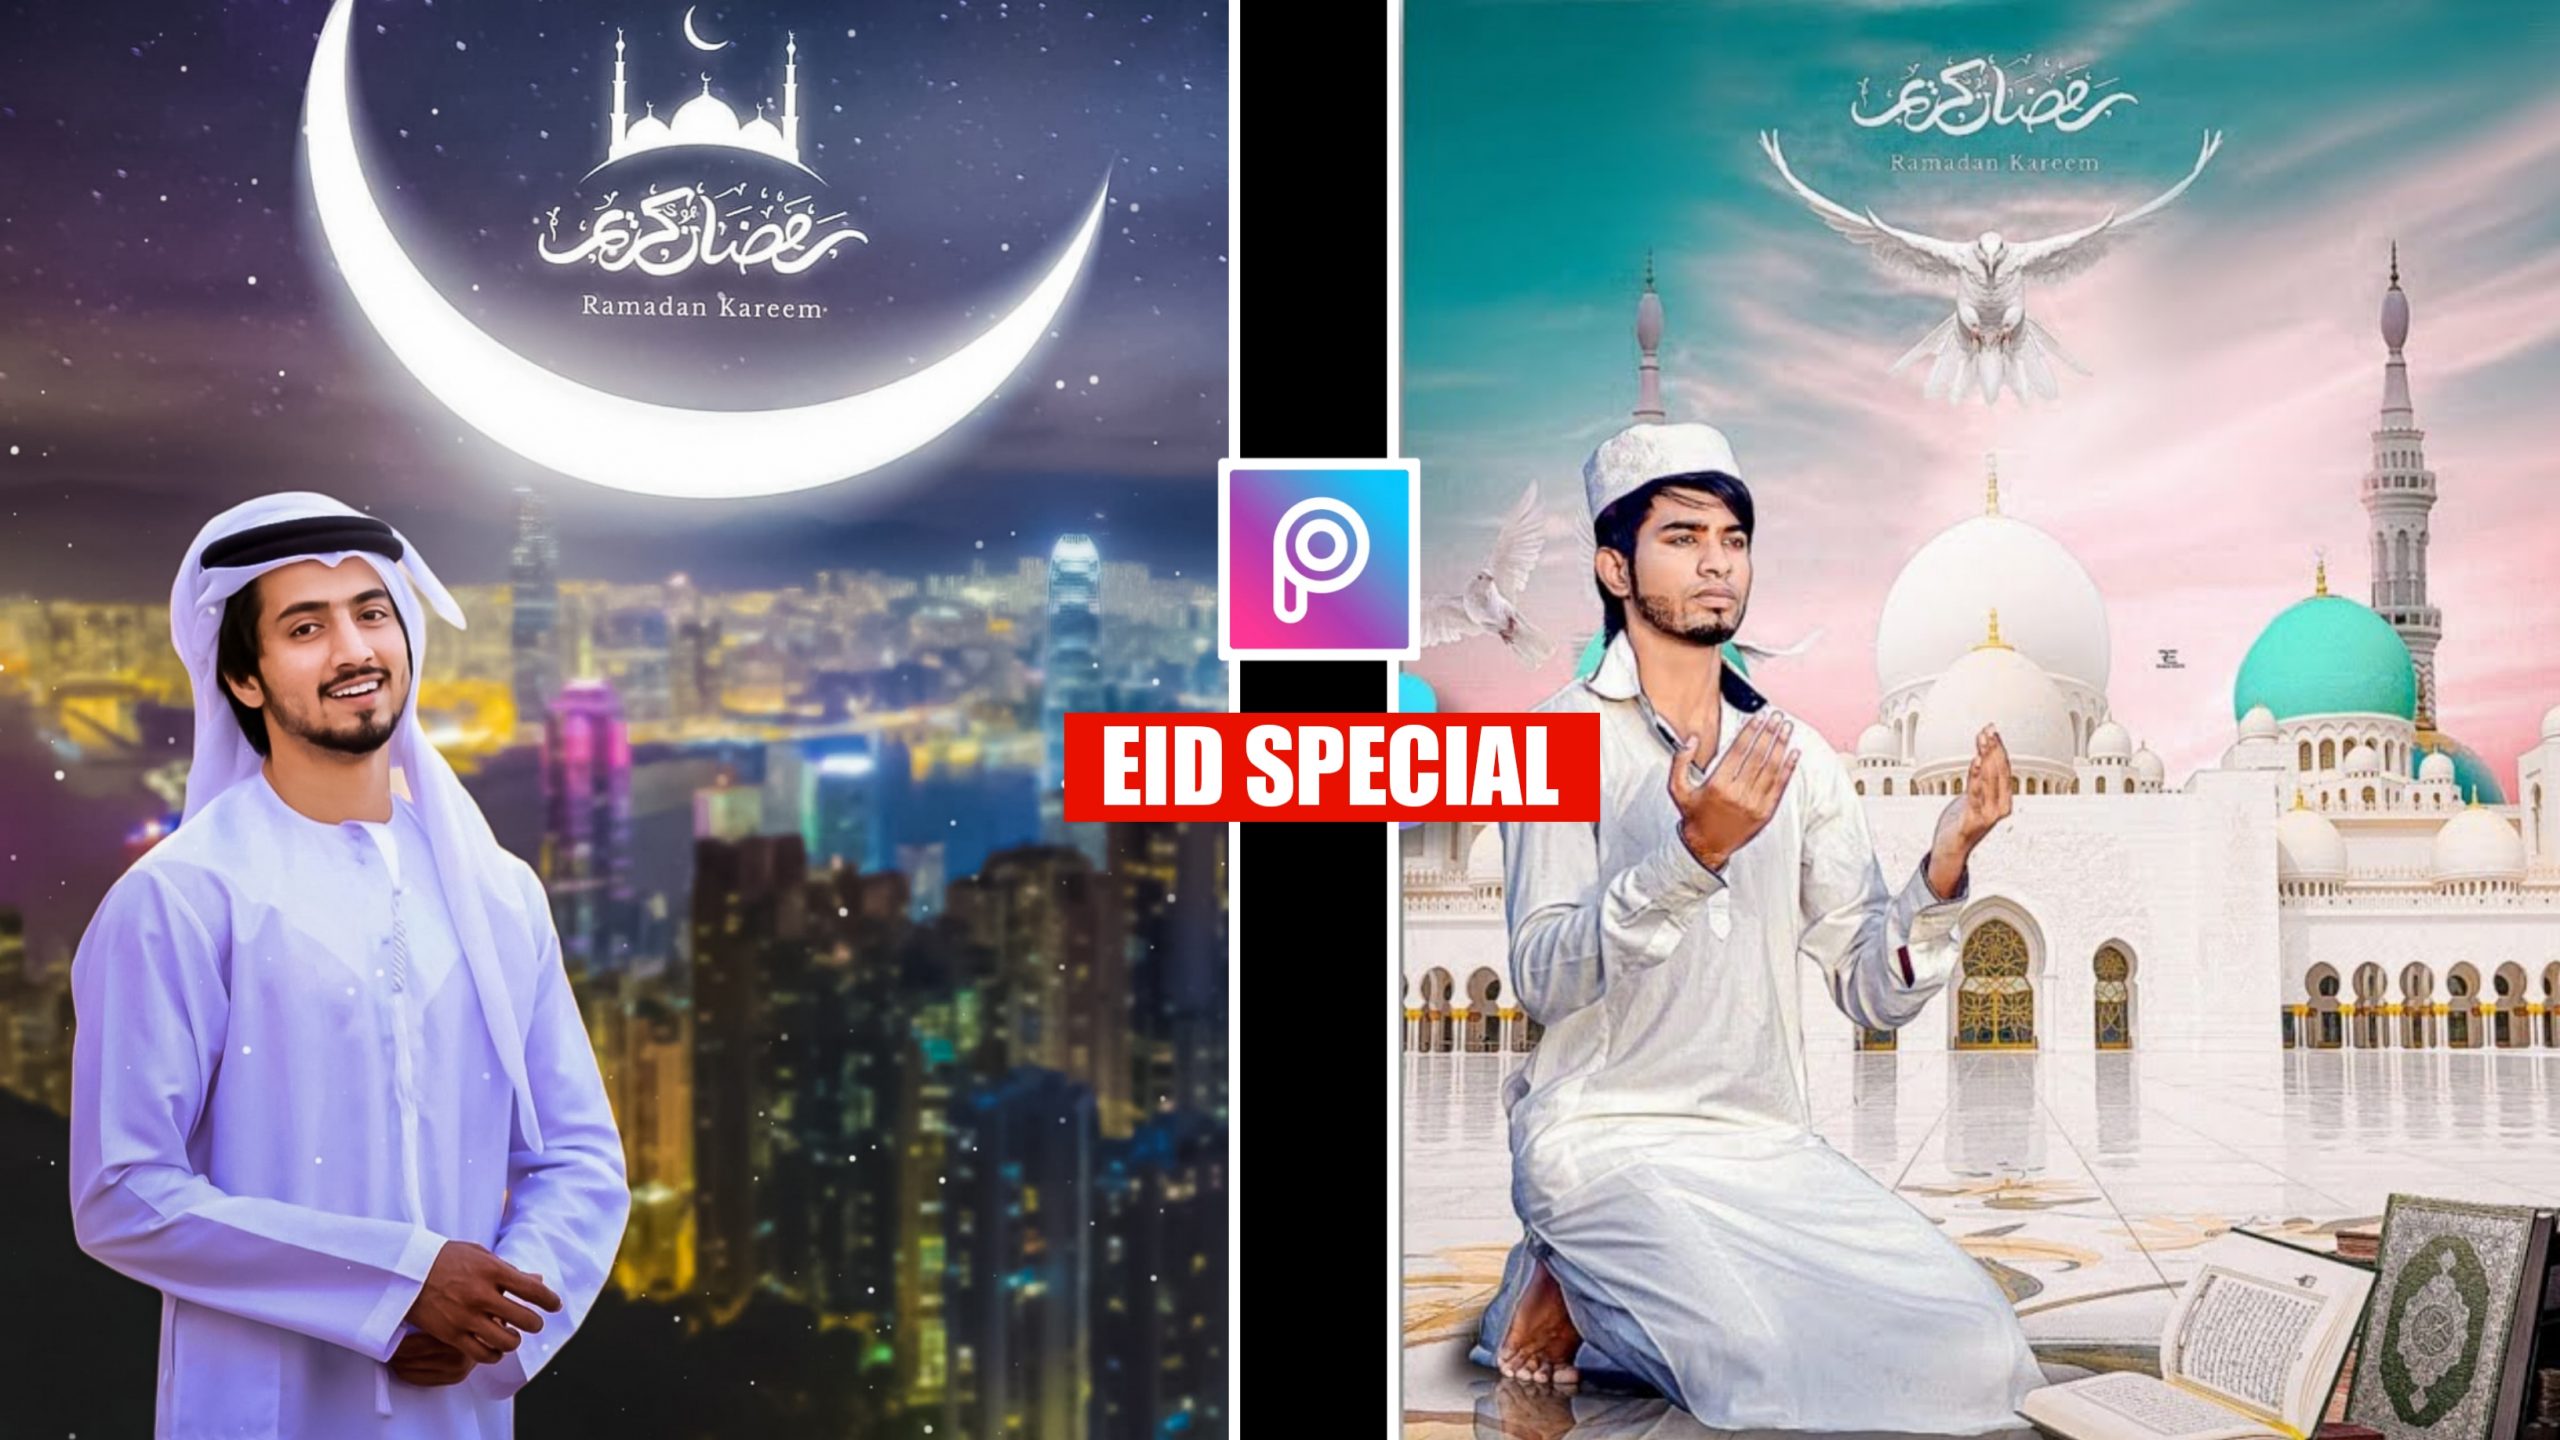 Eid mubarak editing background  Picsart Eid editing background  eid  backgrounds